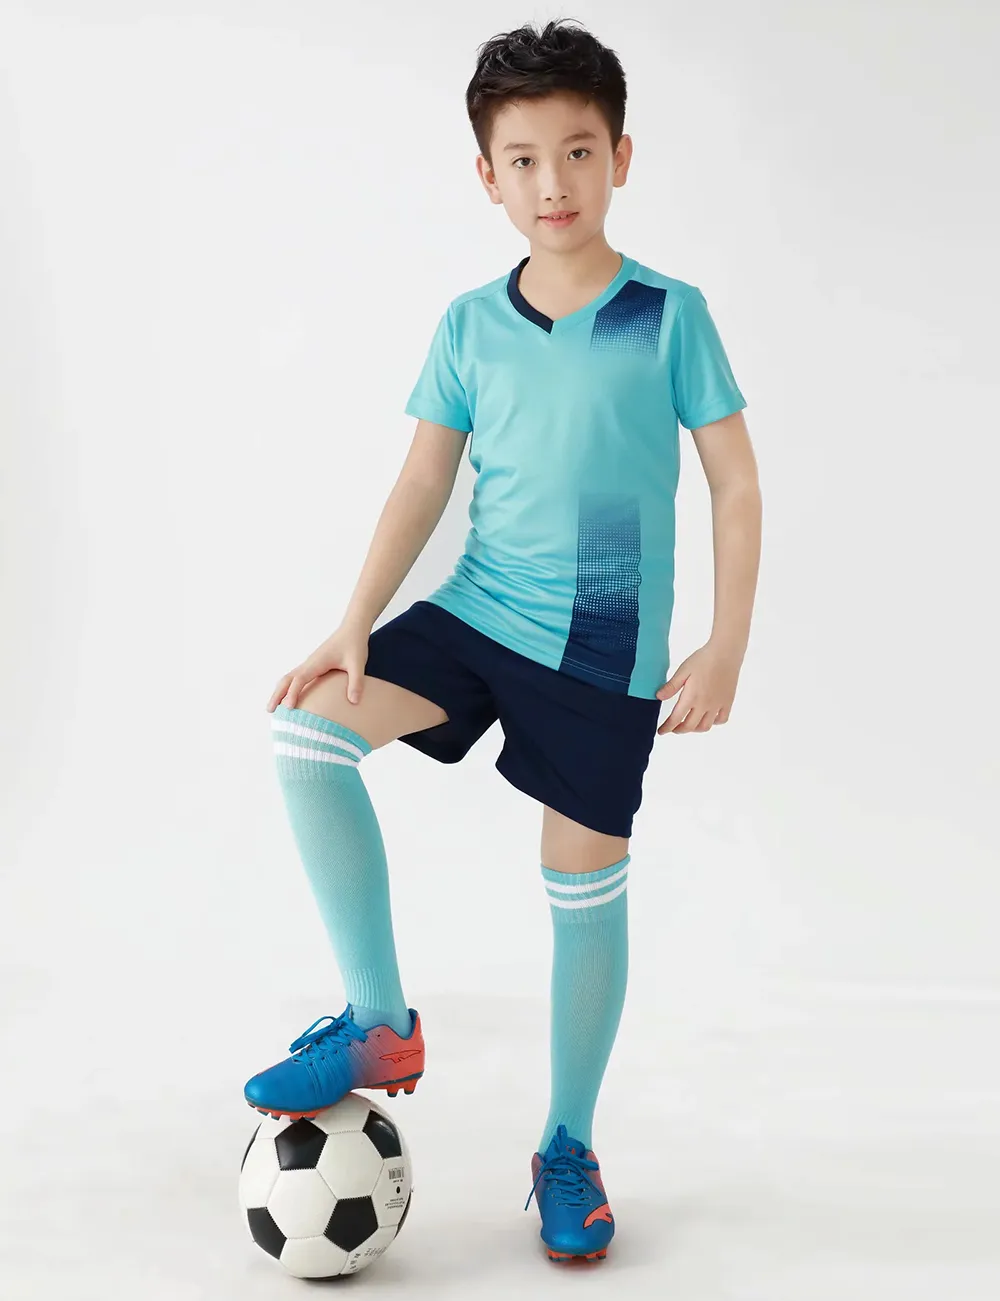 Jessie_kicks #G470 Aiir Foorce 1 Design 2021 Camisetas de moda Ropa para niños Ourtdoor Sport